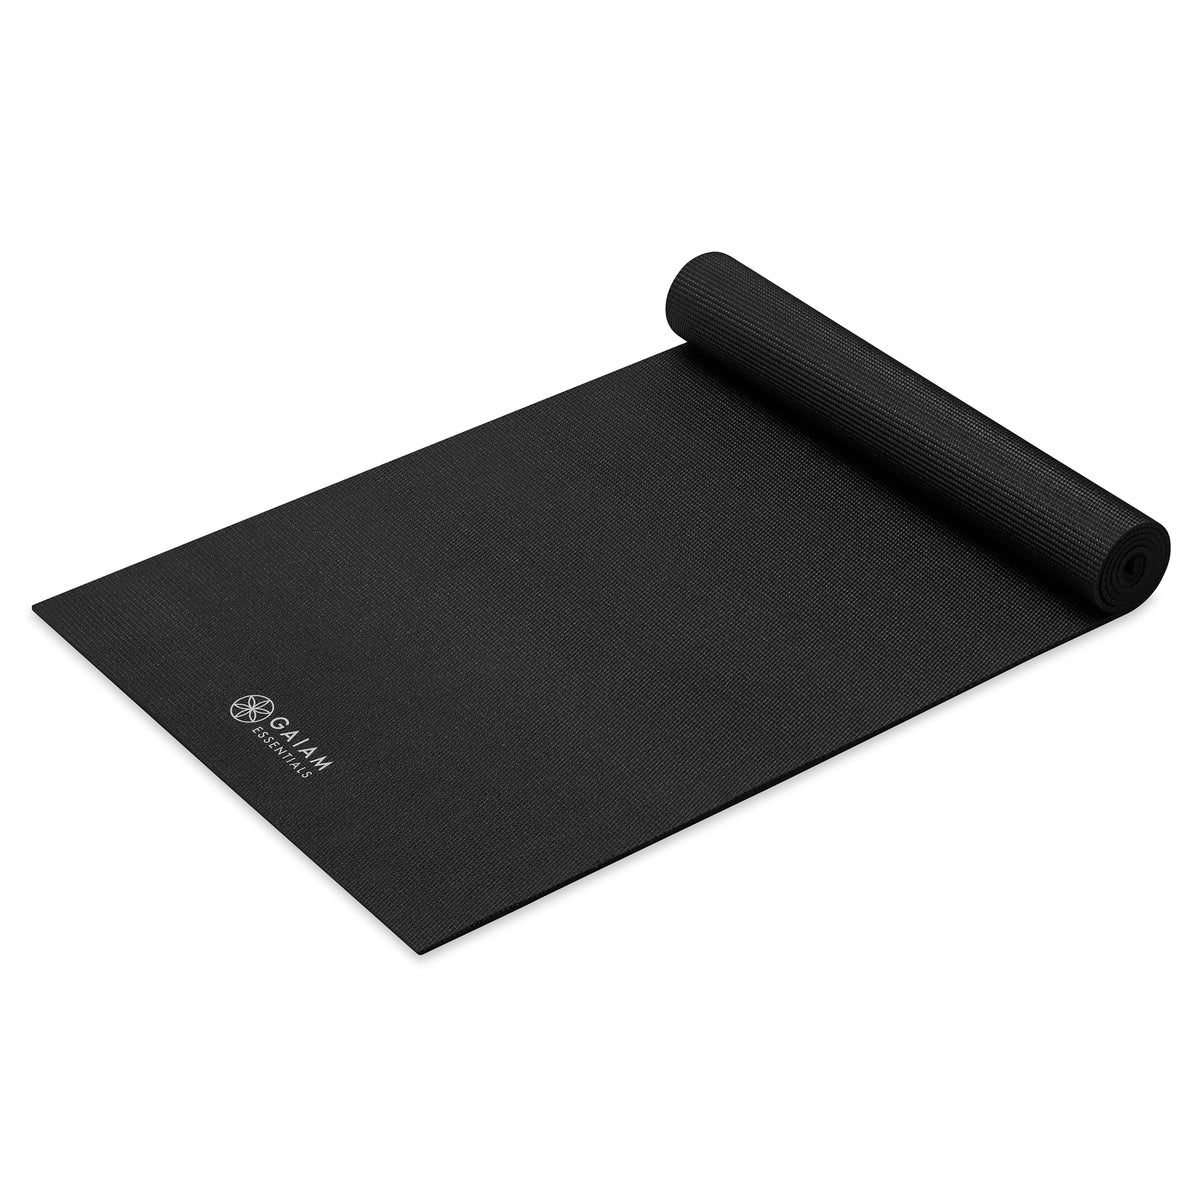 Gaiam Breathable Yoga Mat Bag - Black – Target Inventory Checker